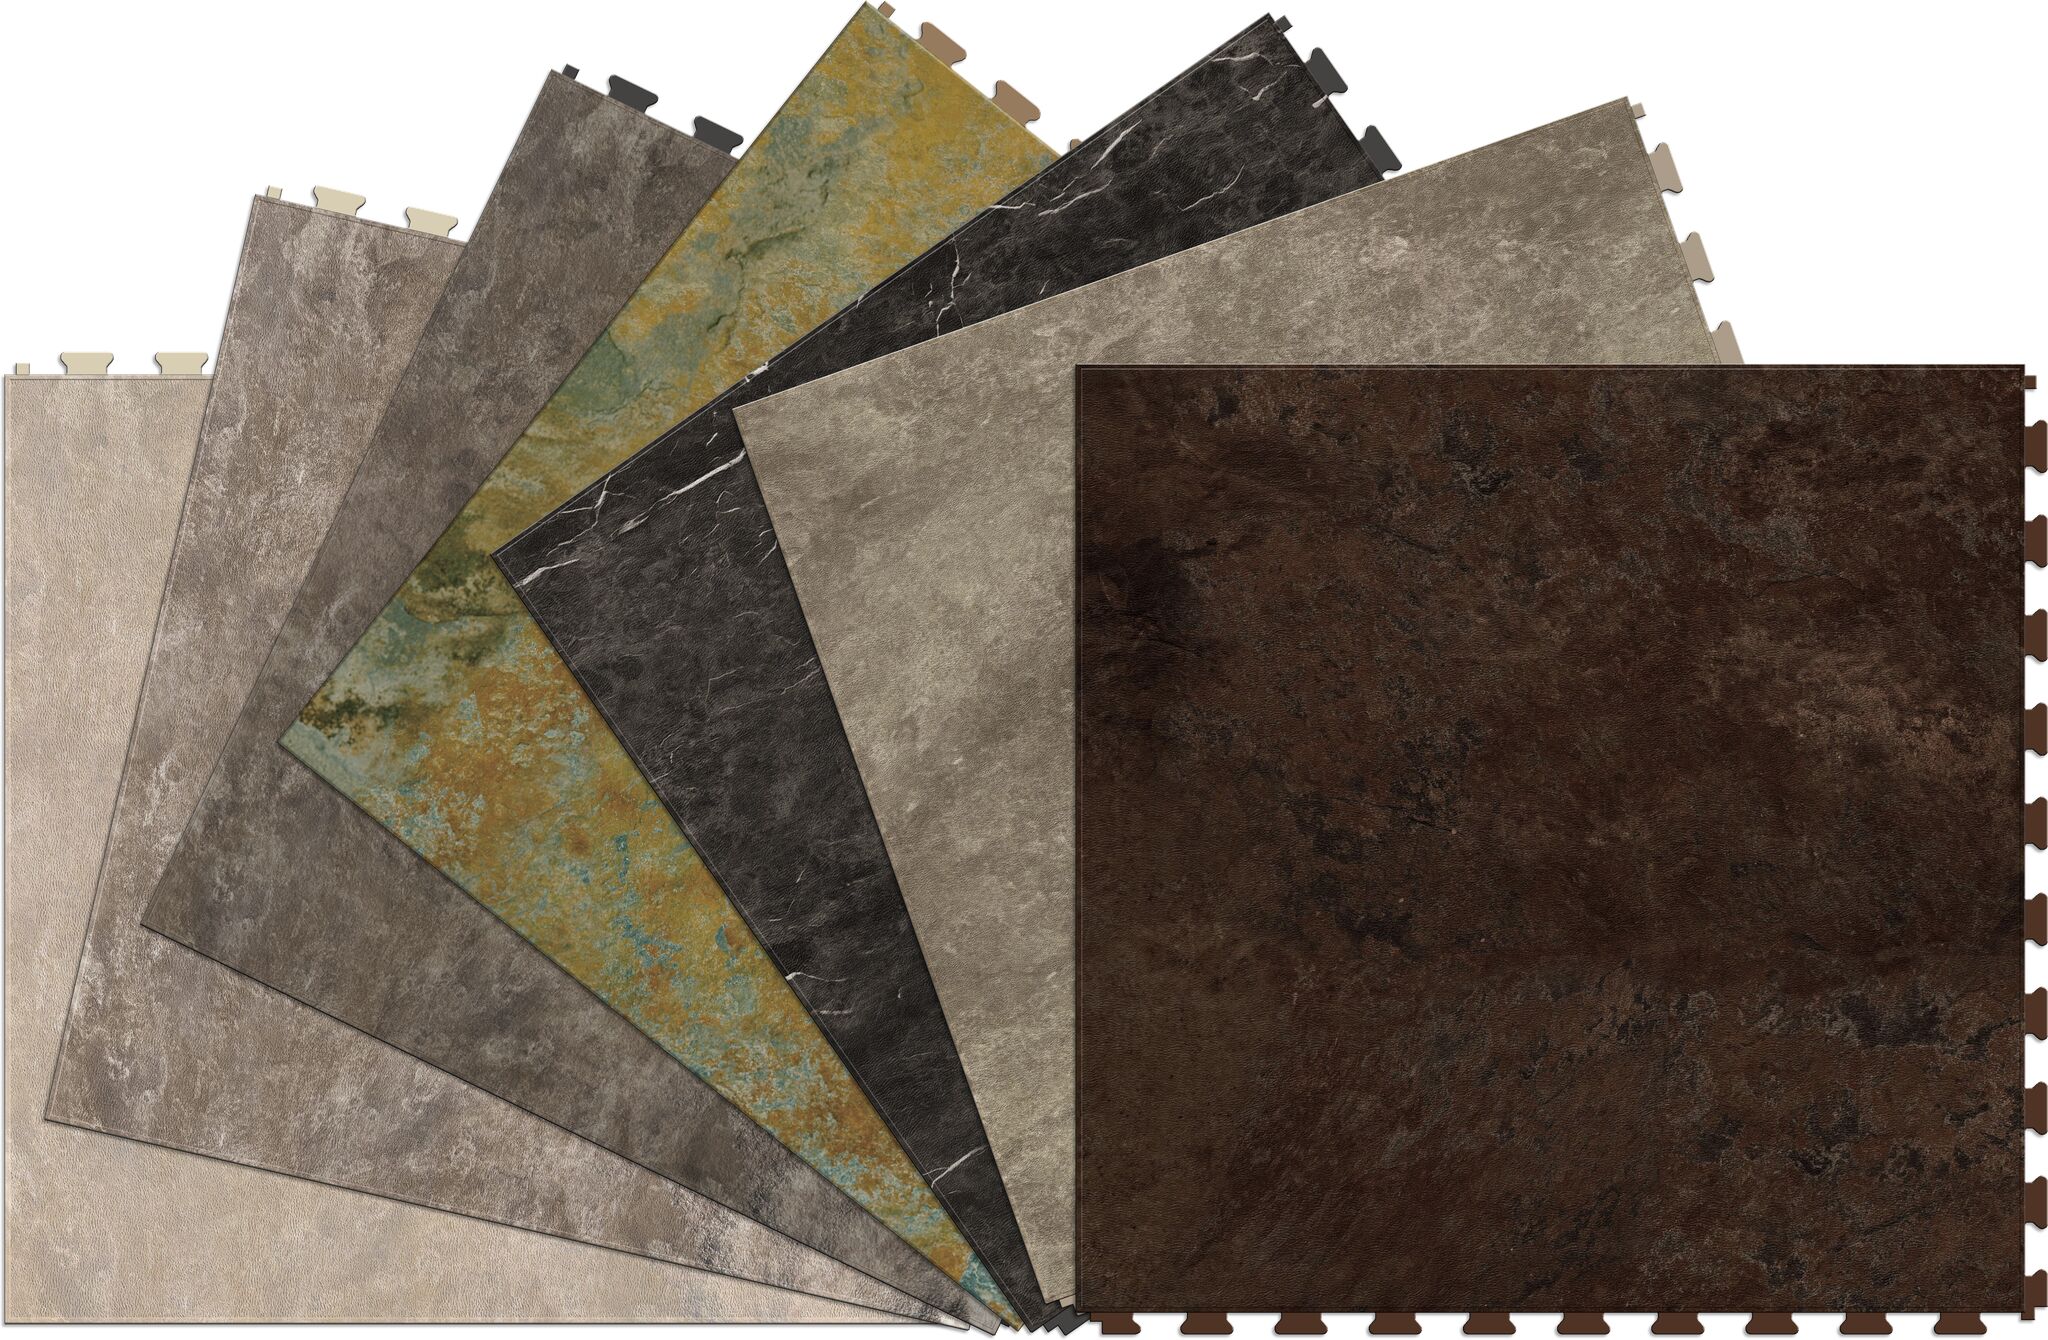 Perfection Floor Tile Sample - Luxury Vinyl Tile Color: Blackwood Oak